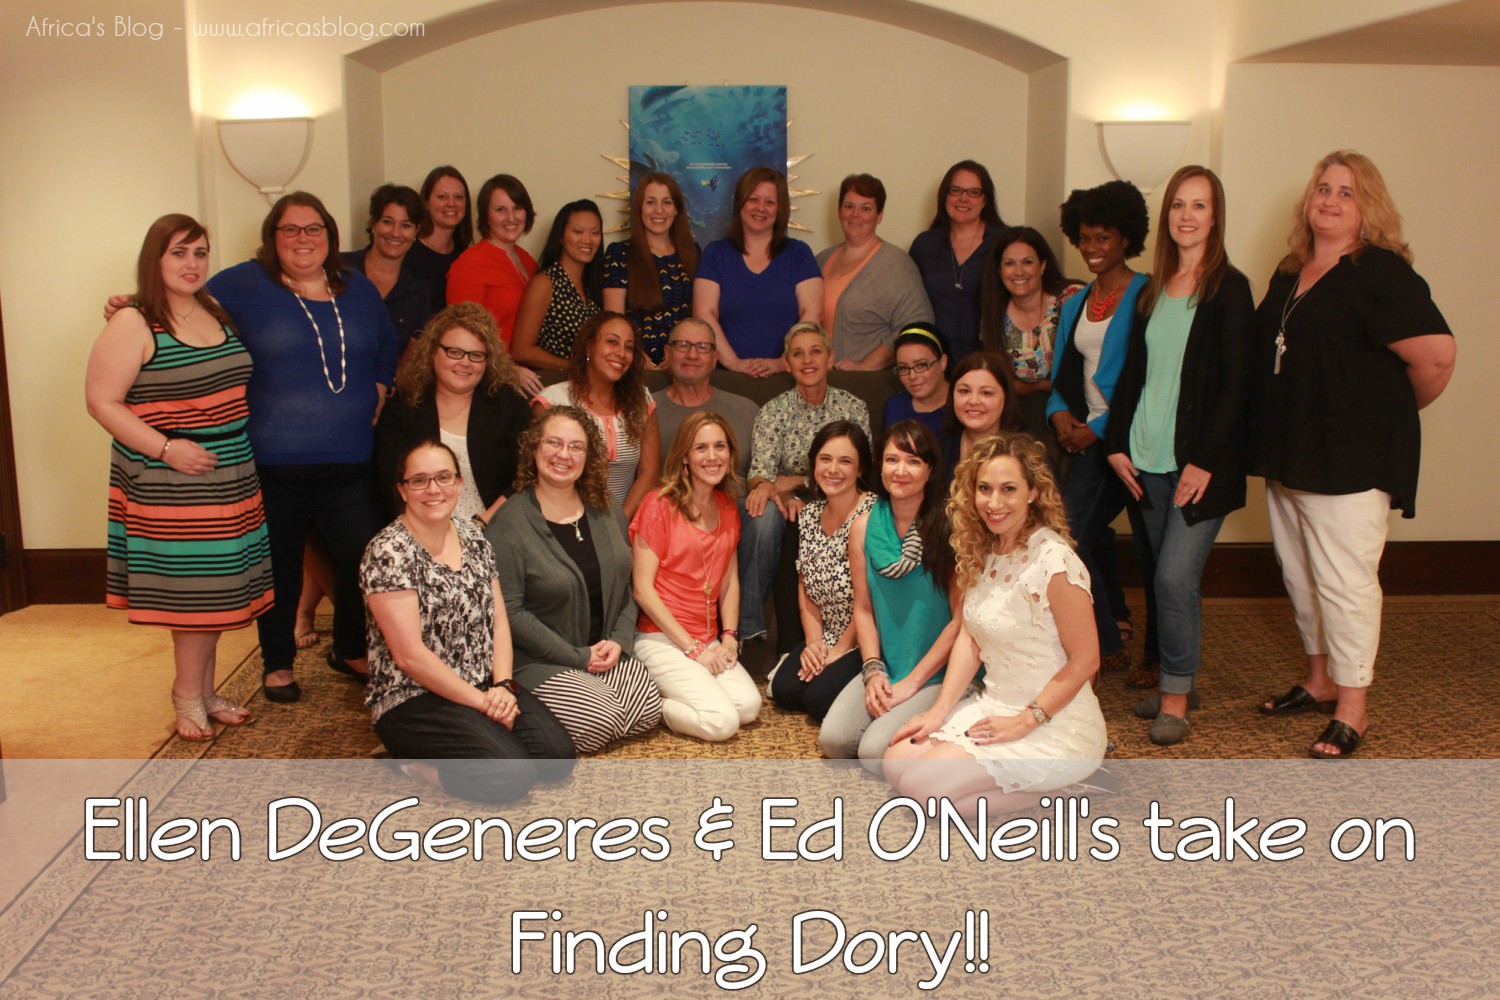 Ellen DeGeneres & Ed O'Neill's take on Finding Dory! #FindingDoryEvent